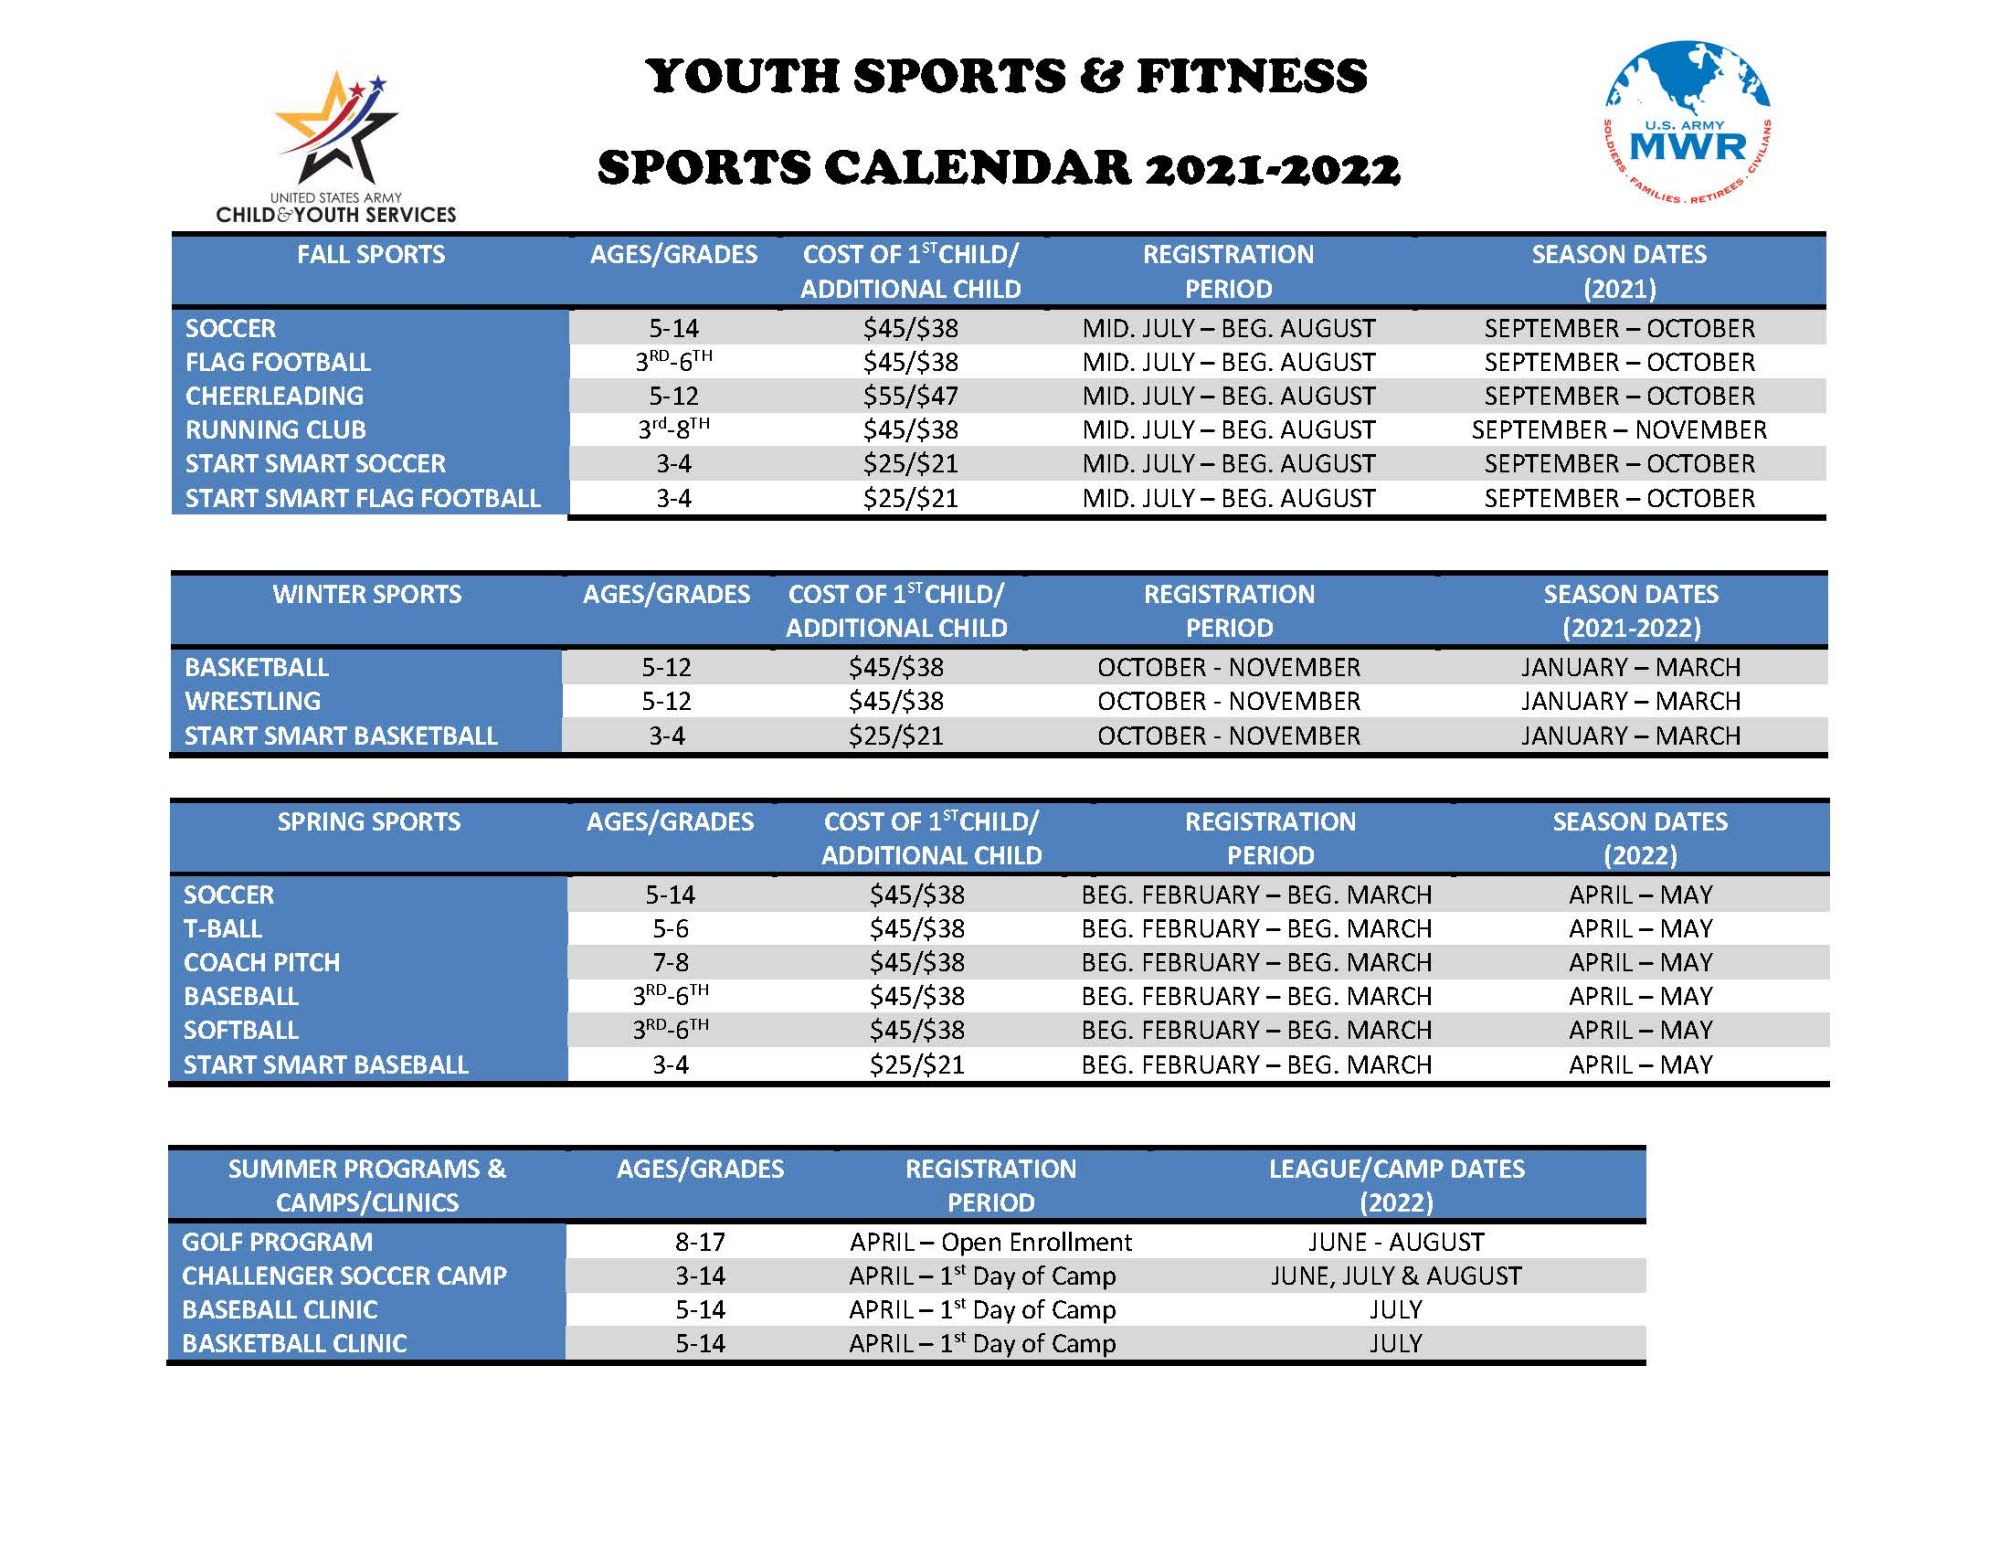 Youth Sports Calendar 2021-2022.jpg